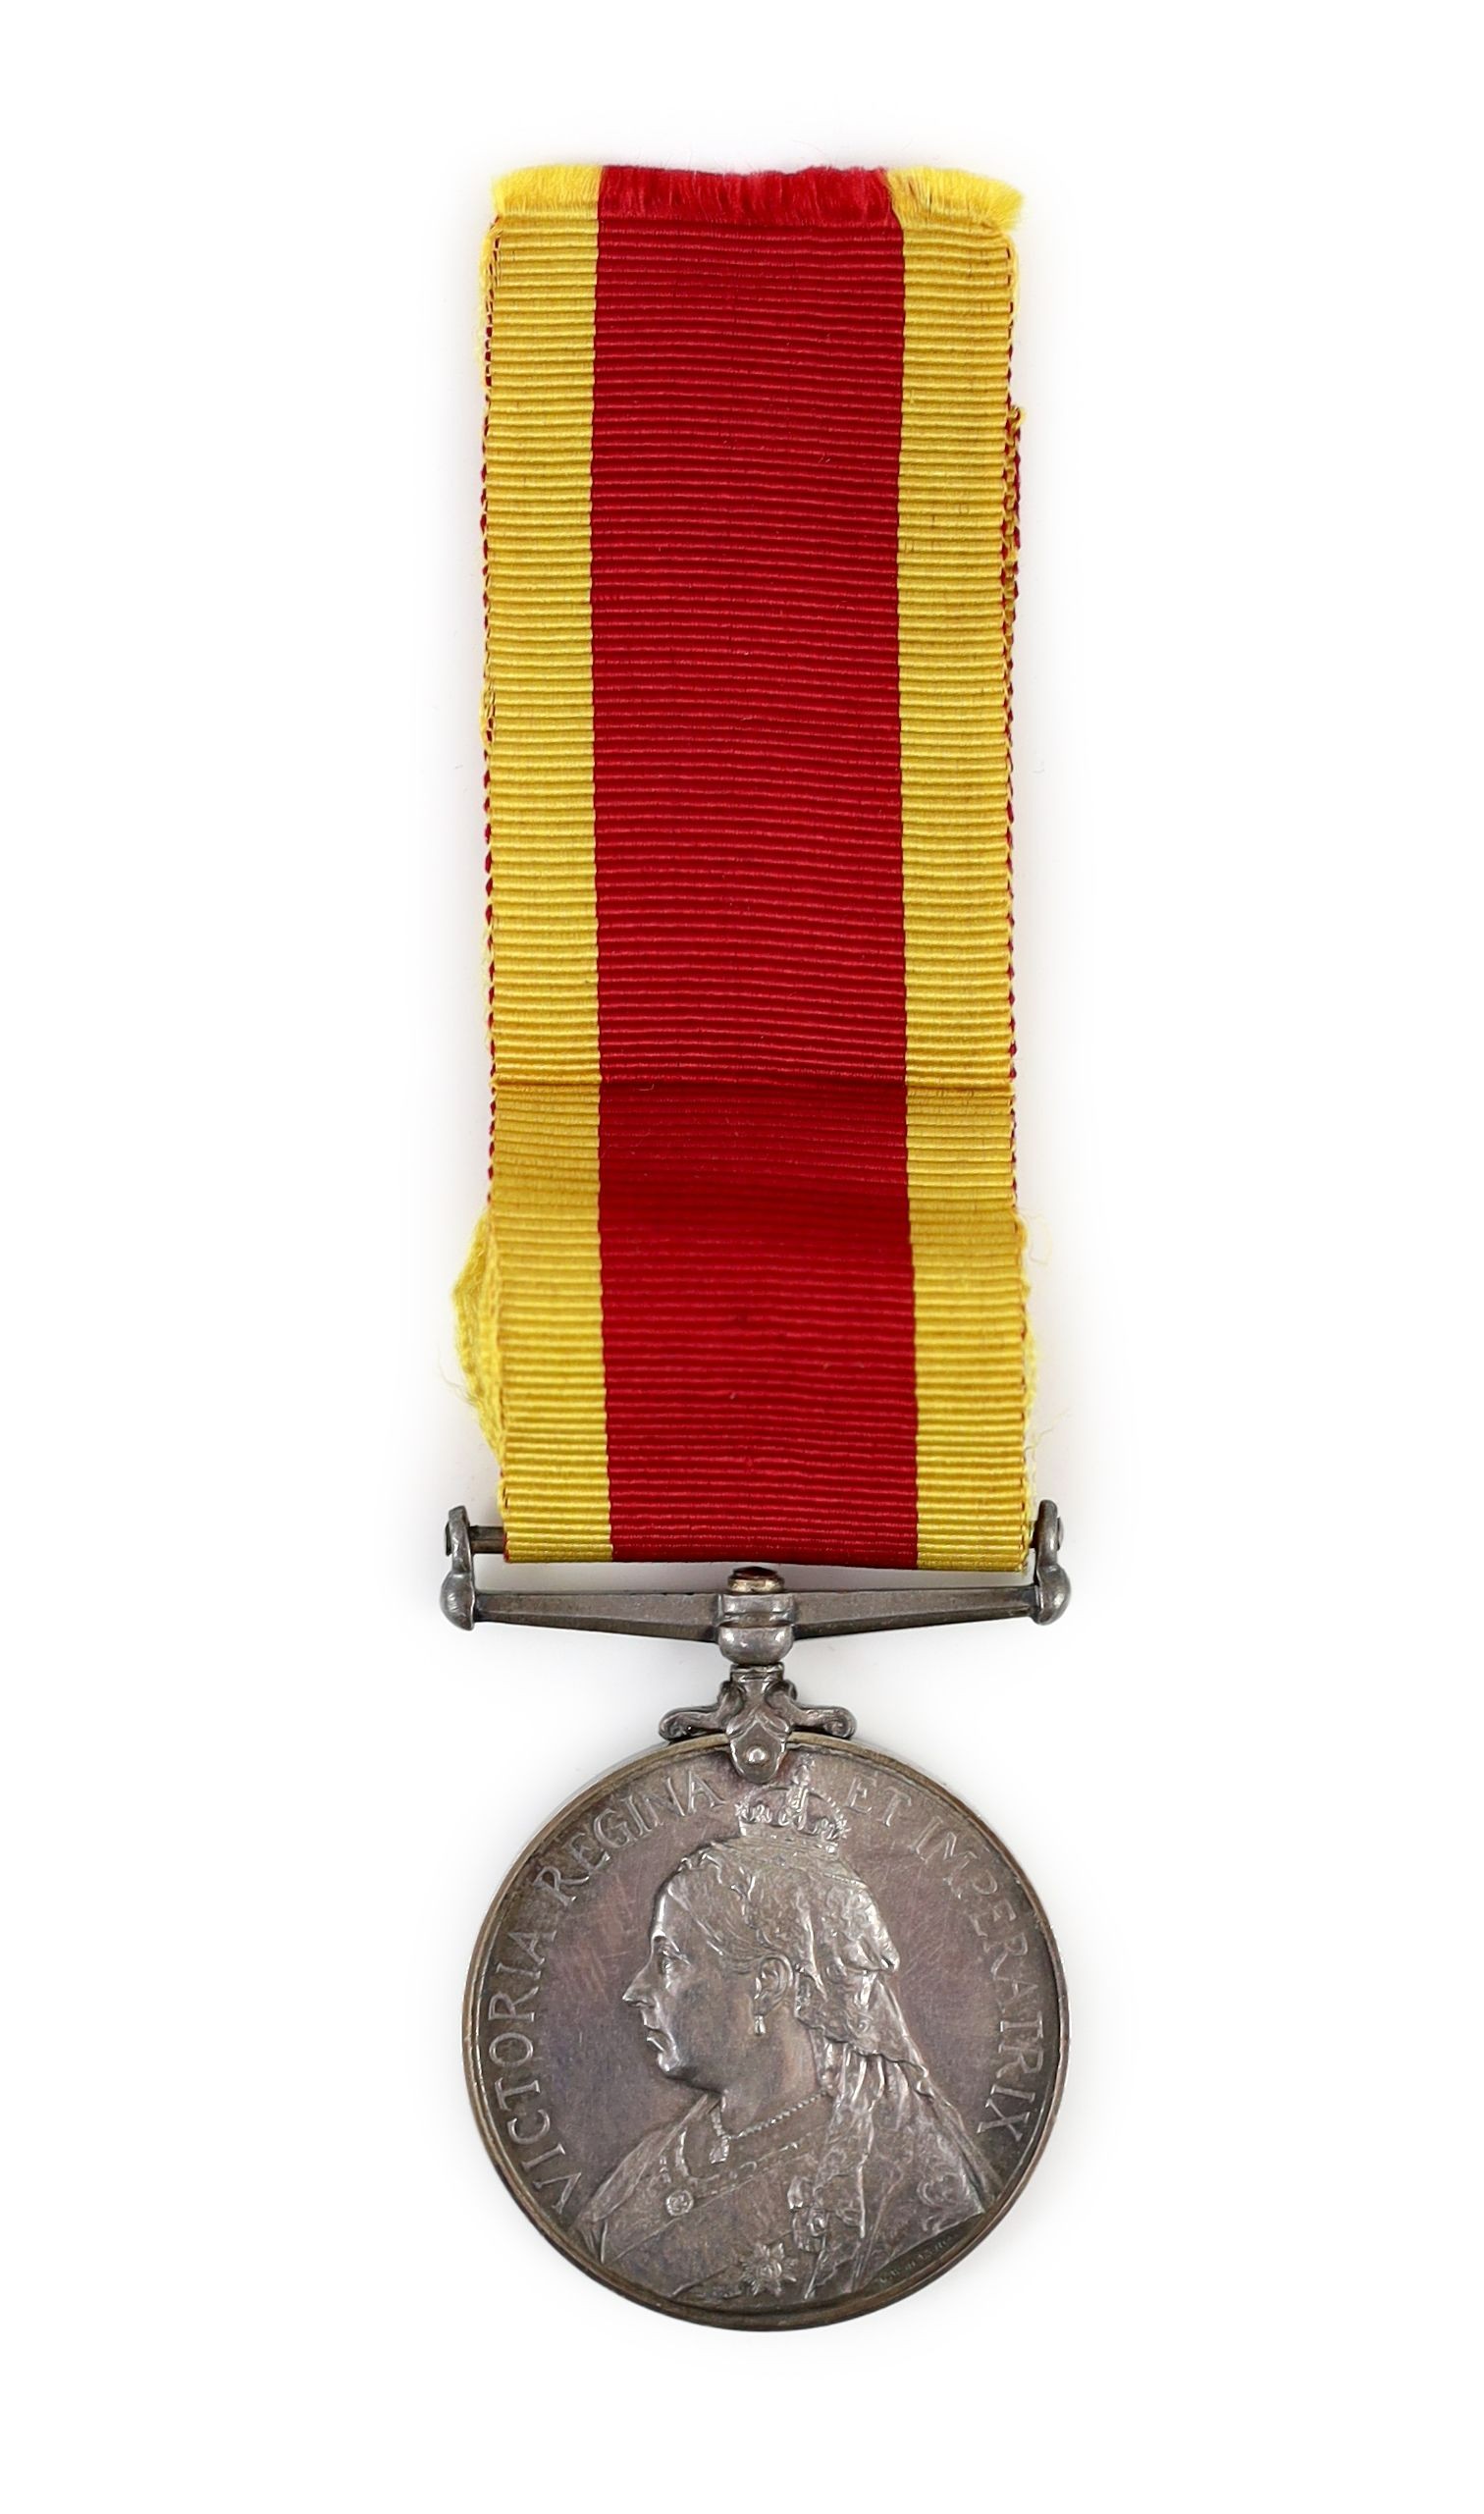 A China 1900 medal to L. -CORPL. F.W. FOWLER. SHANGHAI VOLS